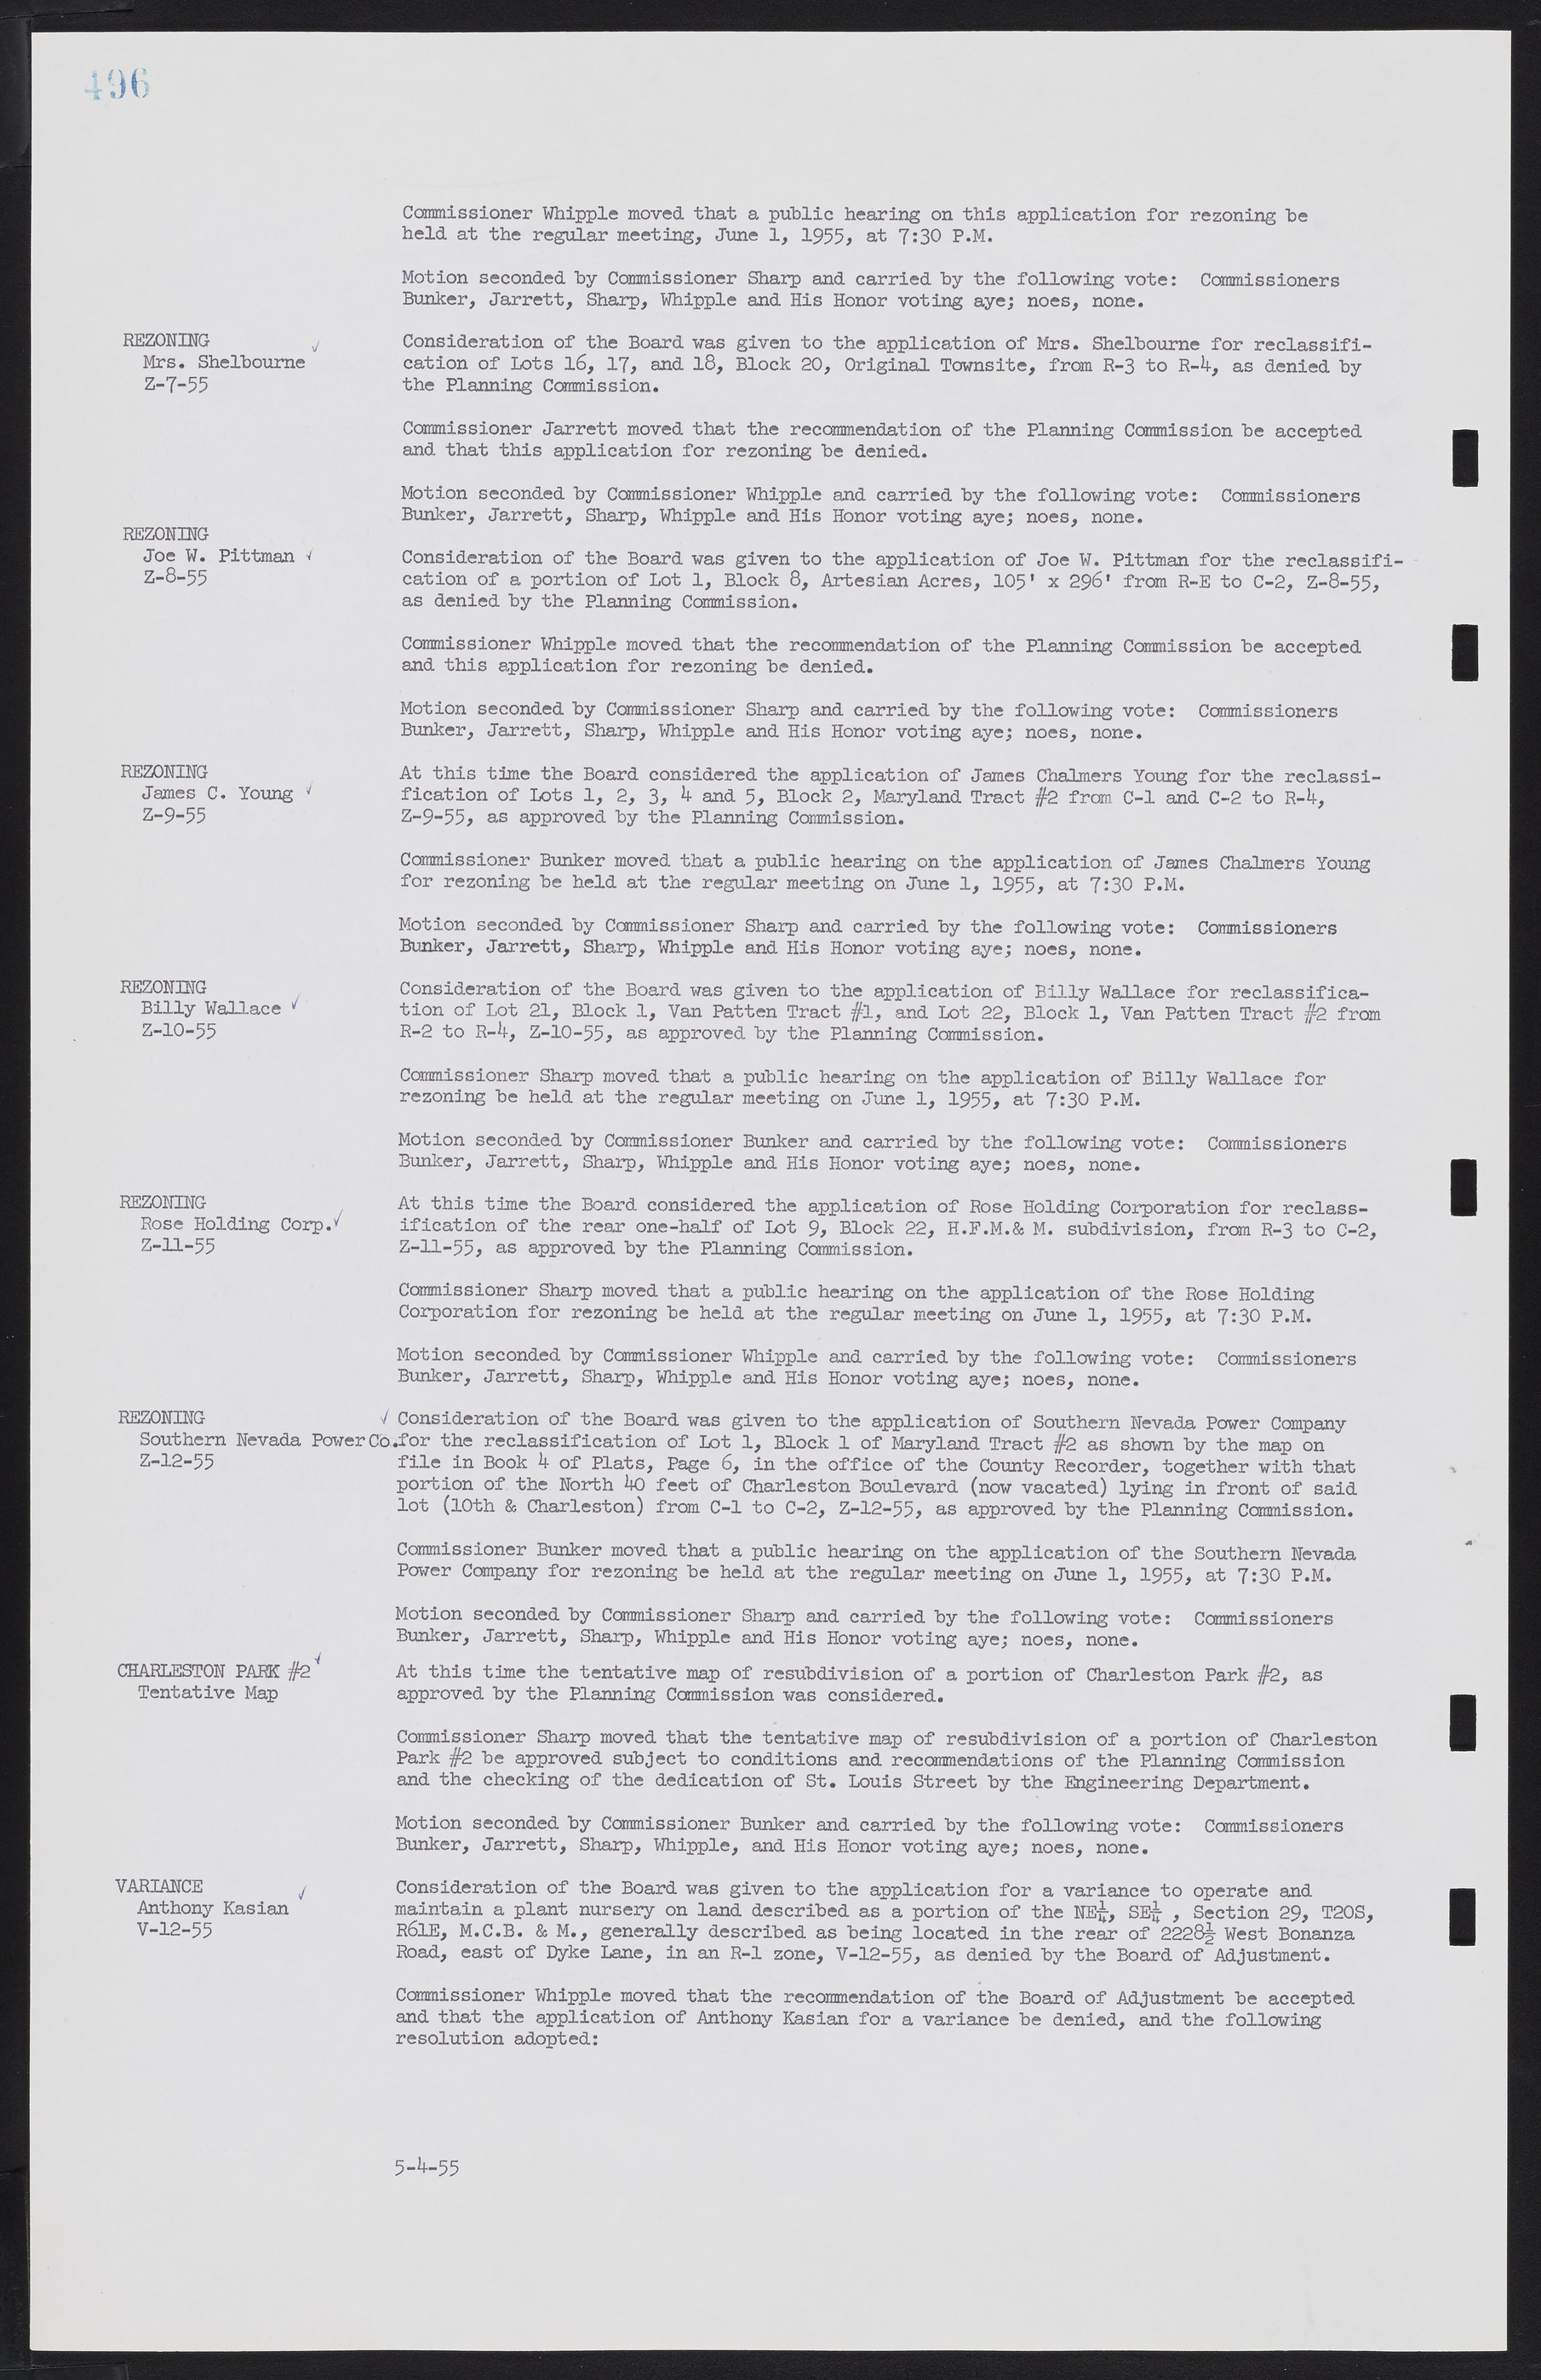 Las Vegas City Commission Minutes, February 17, 1954 to September 21, 1955, lvc000009-502